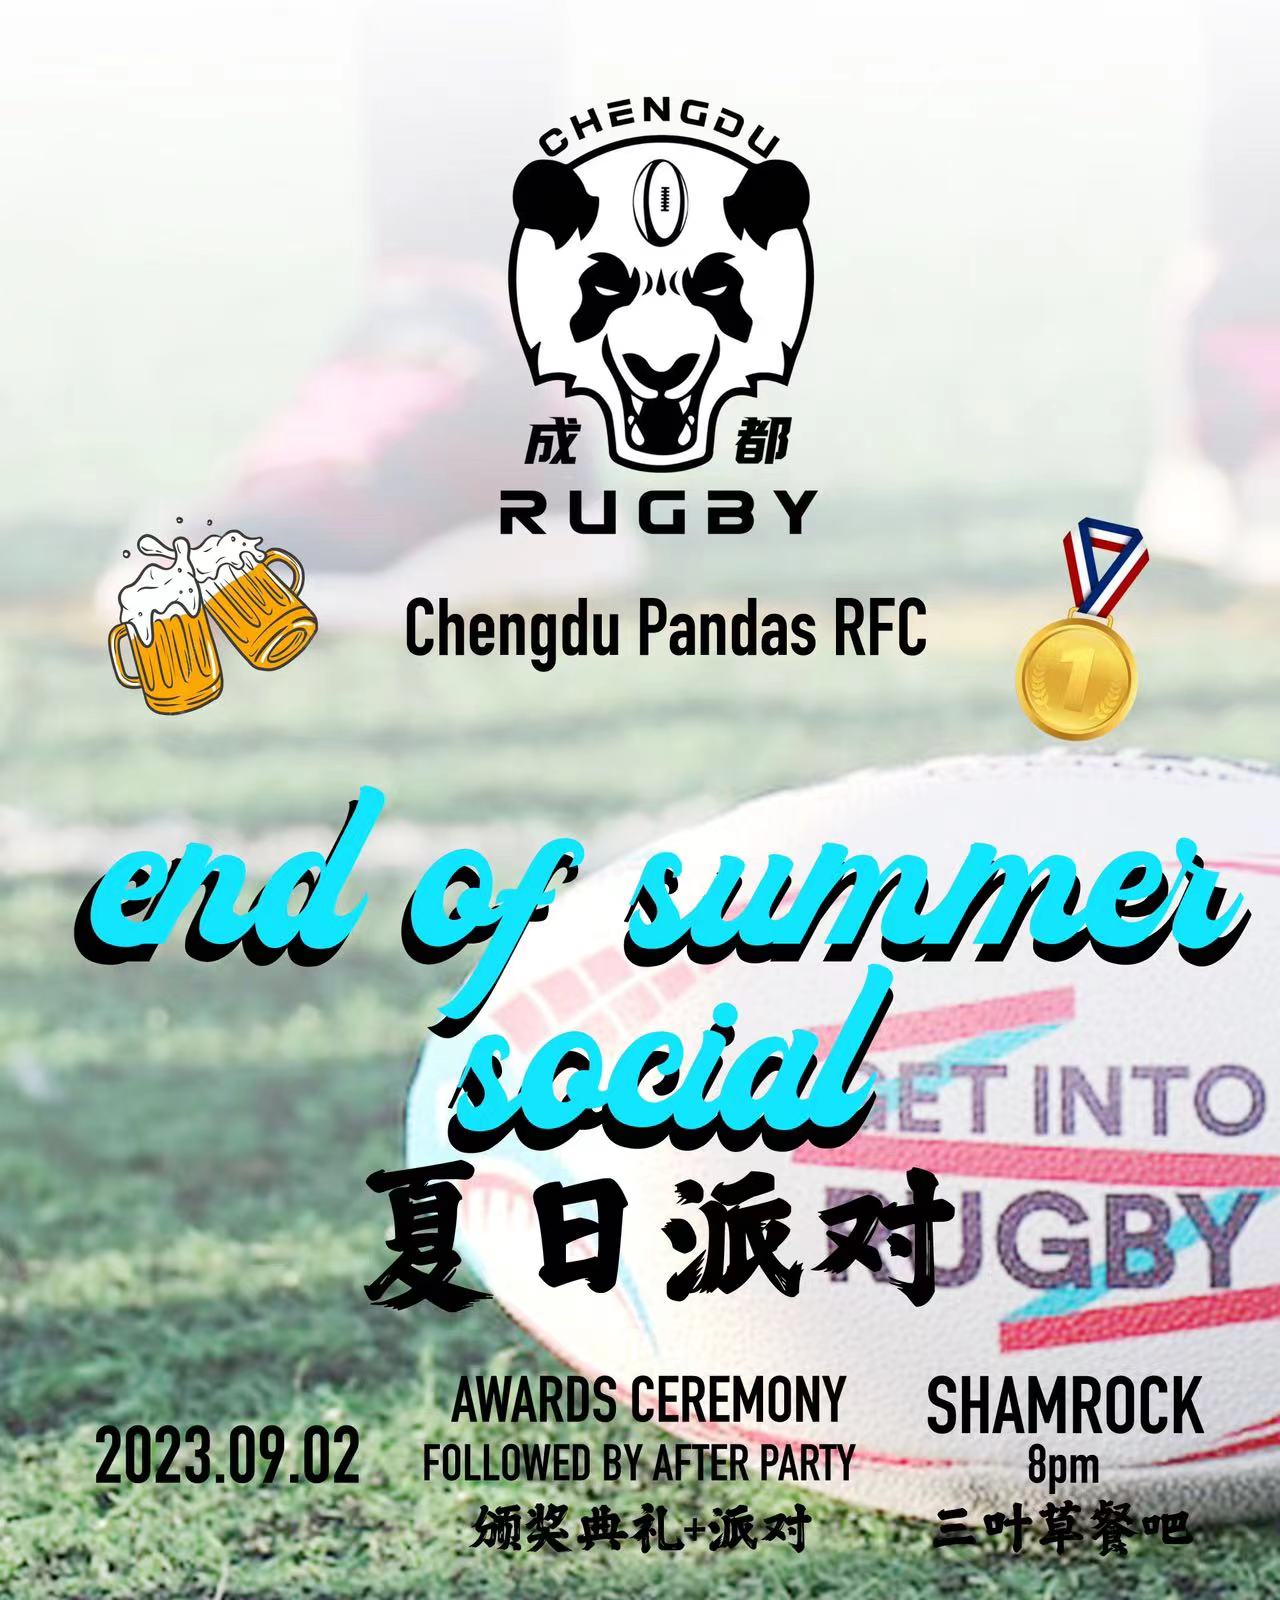 Chengdu Pandas Social Night chengdu chengdu expat